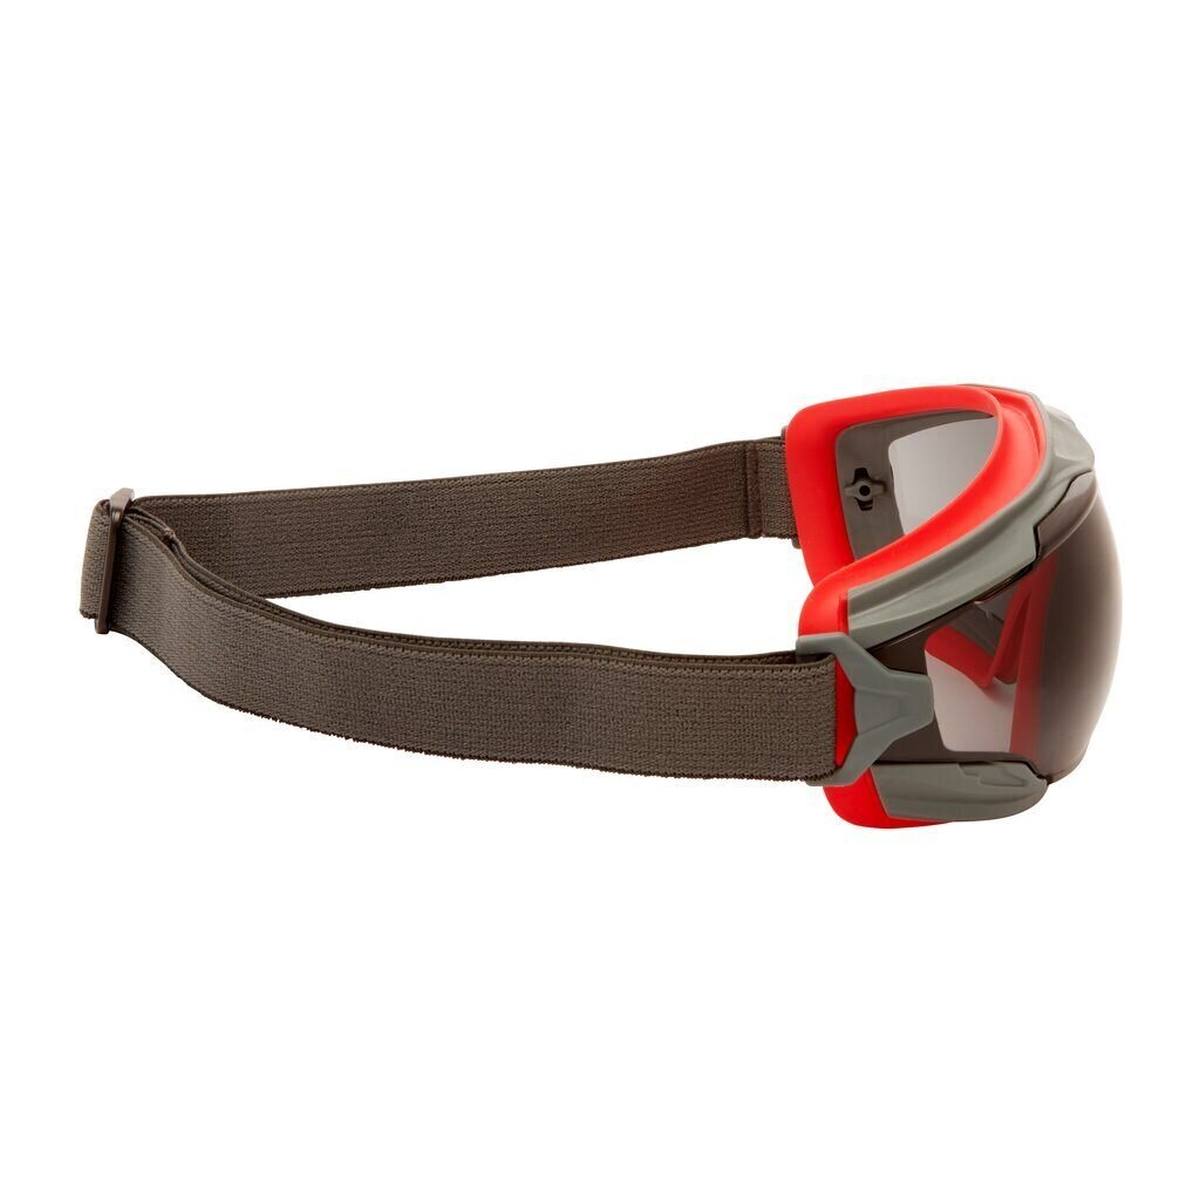 3M GoggleGear 500 full-vision goggles GG502SGAF-EU, red-grey frame, grey lenses, black neoprene headband